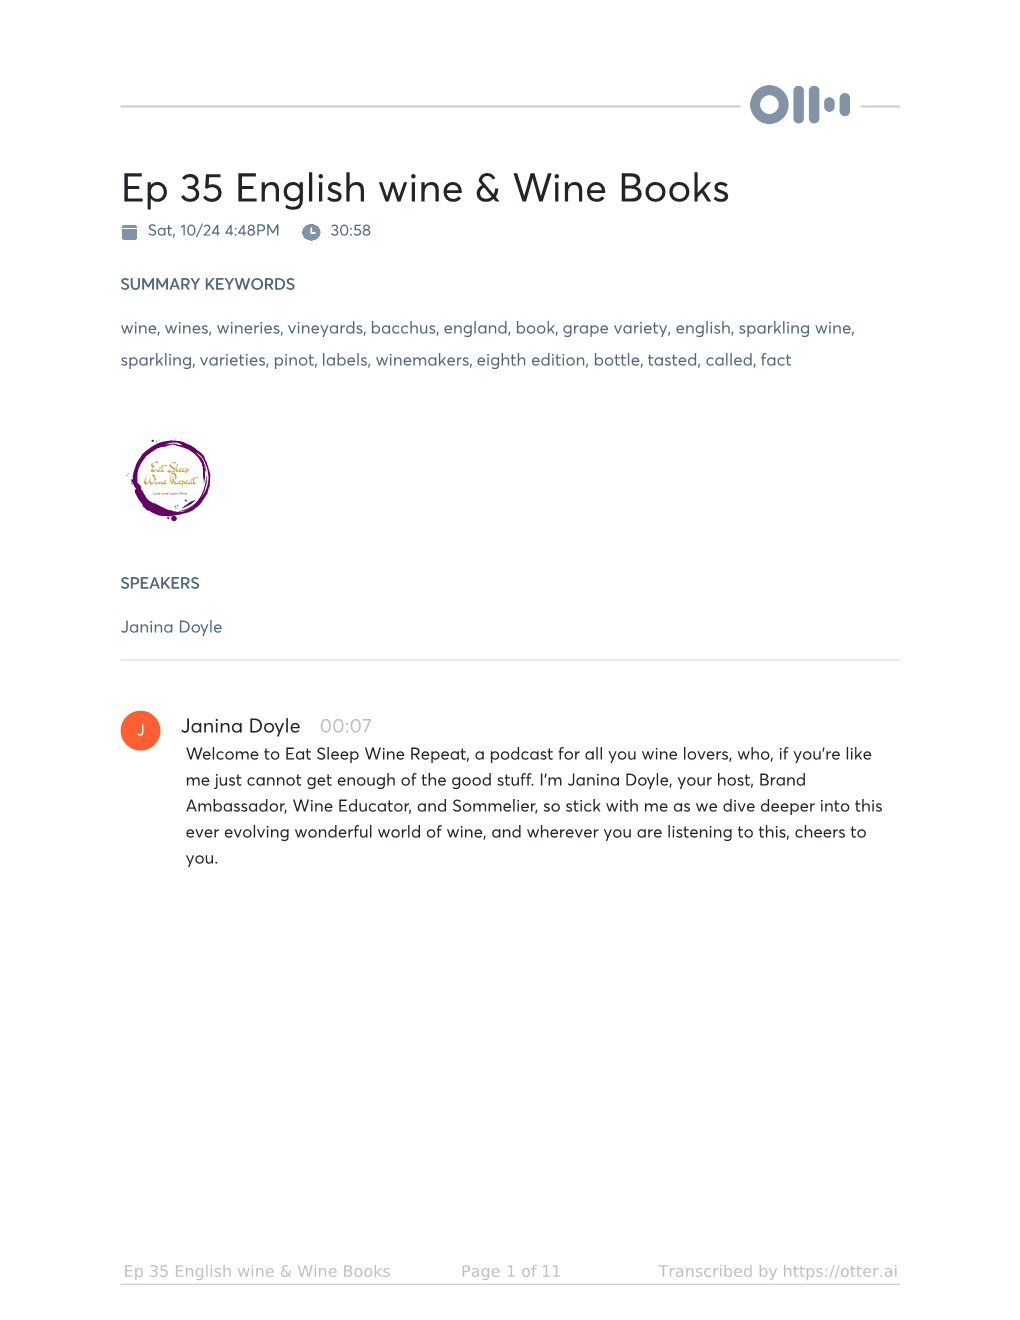 Ep 35 English Wine & Wine Books